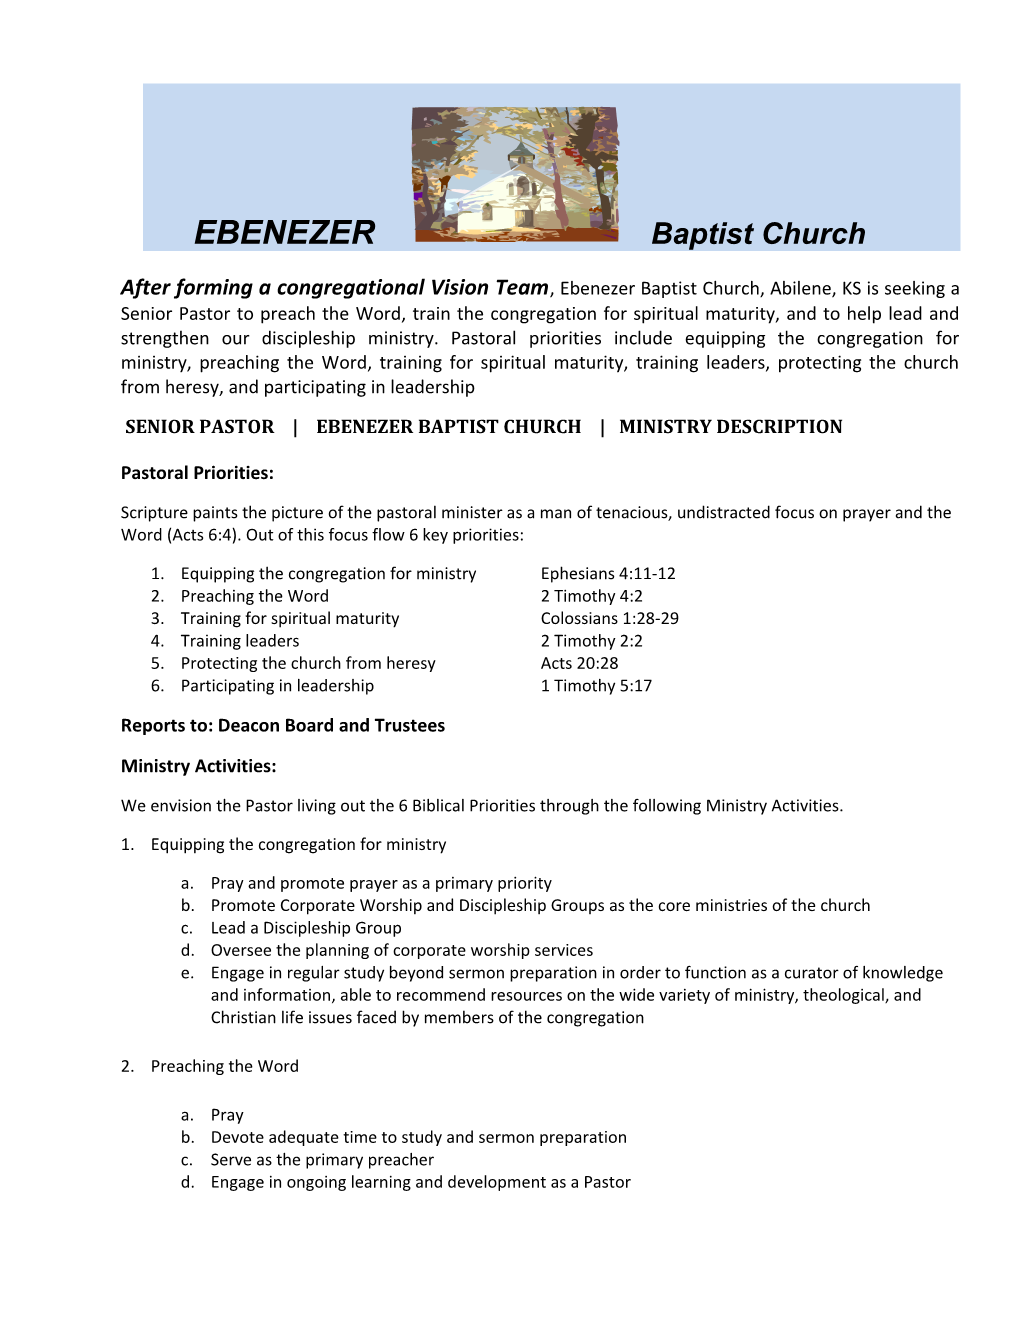 Senior Pastor Ebenezer Baptist Church Ministry Description